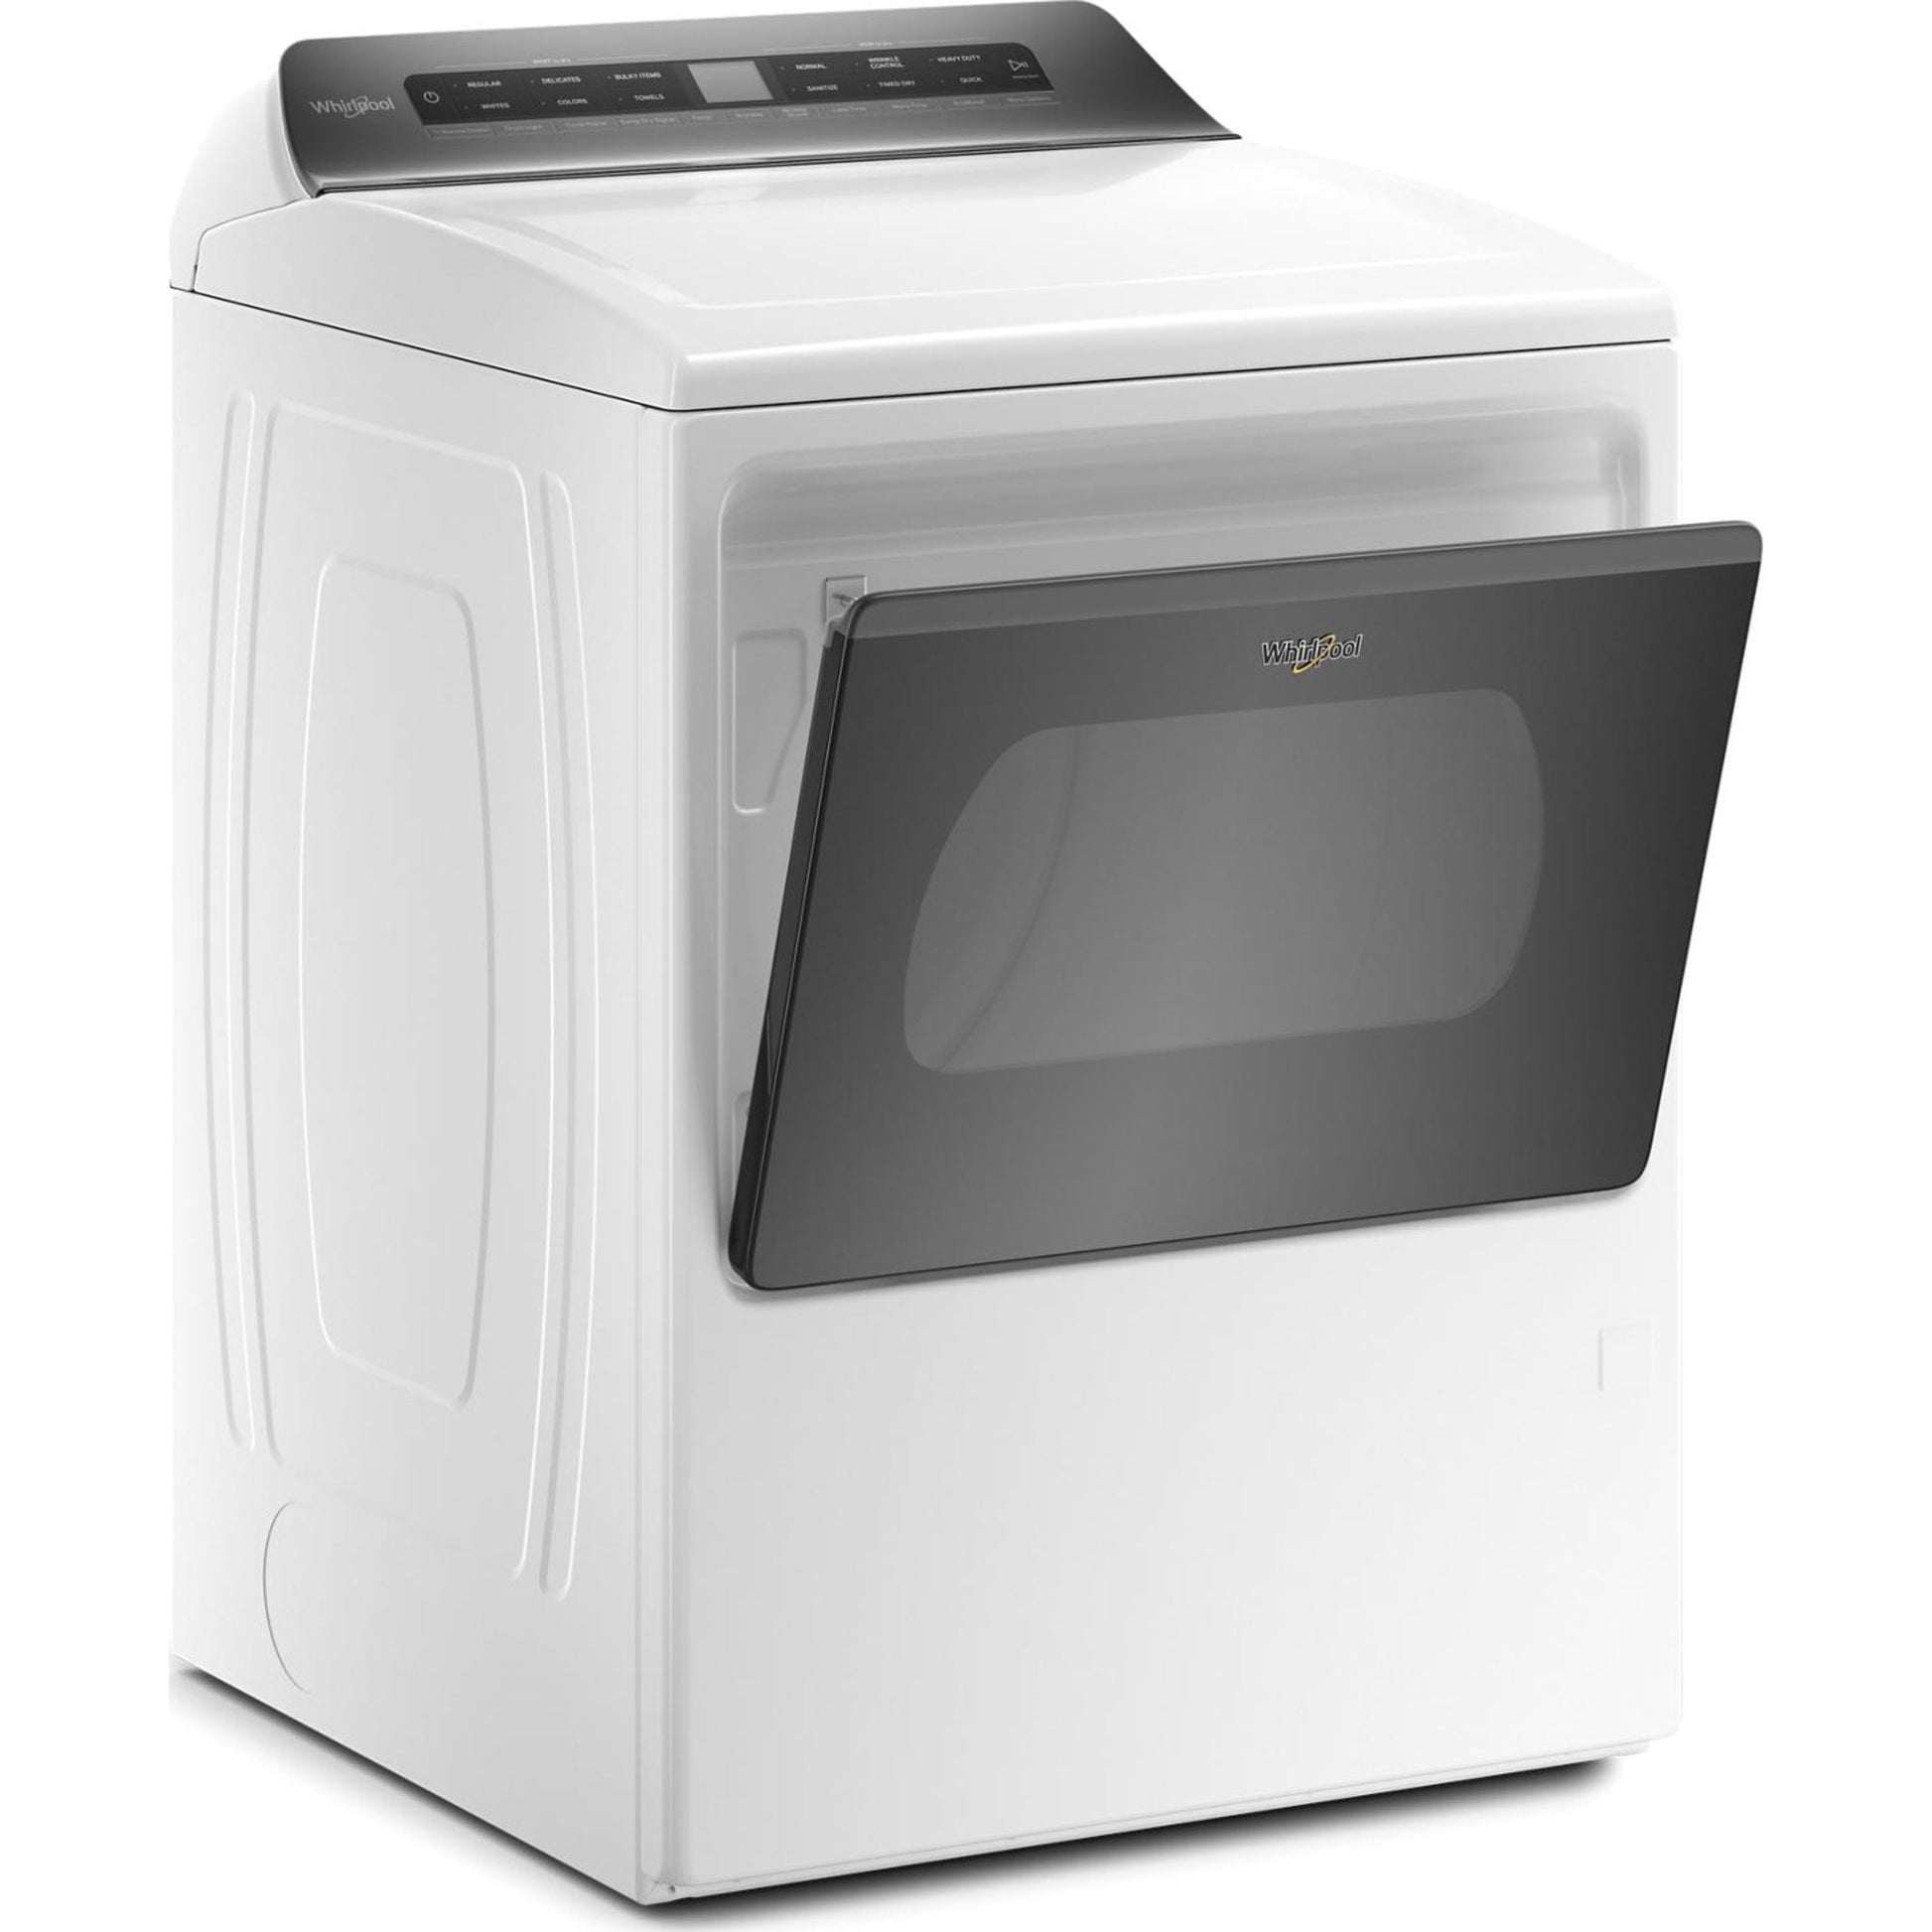 Whirlpool Gas Dryer (WGD6120HW) - White